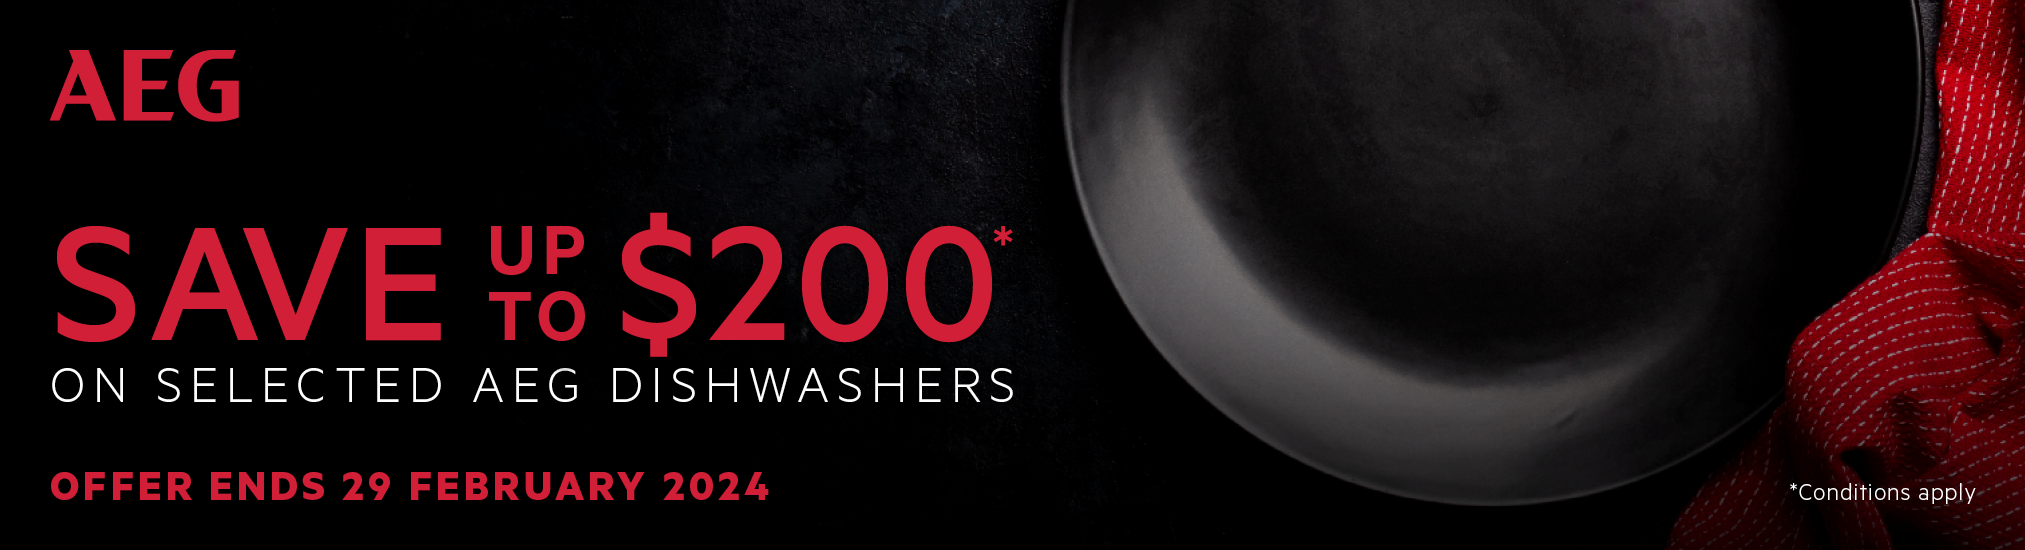 Save Up To $200* On Selected AEG Dishwashers